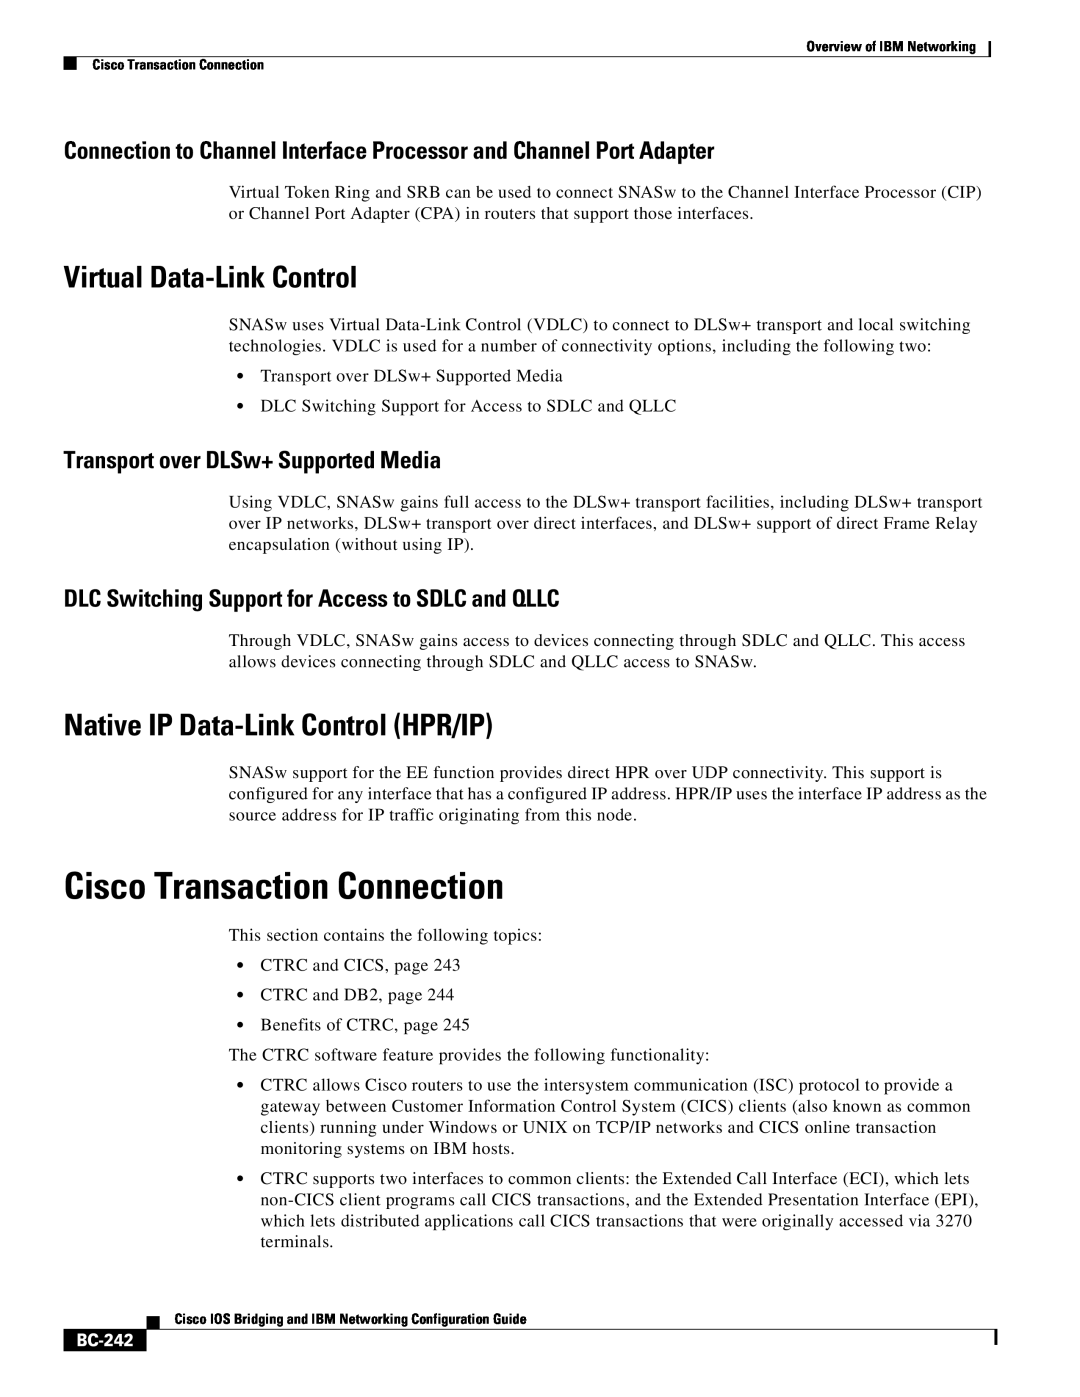 IBM BC-203 manual Cisco Transaction Connection, Virtual Data-Link Control, Native IP Data-Link Control HPR/IP, BC-242 